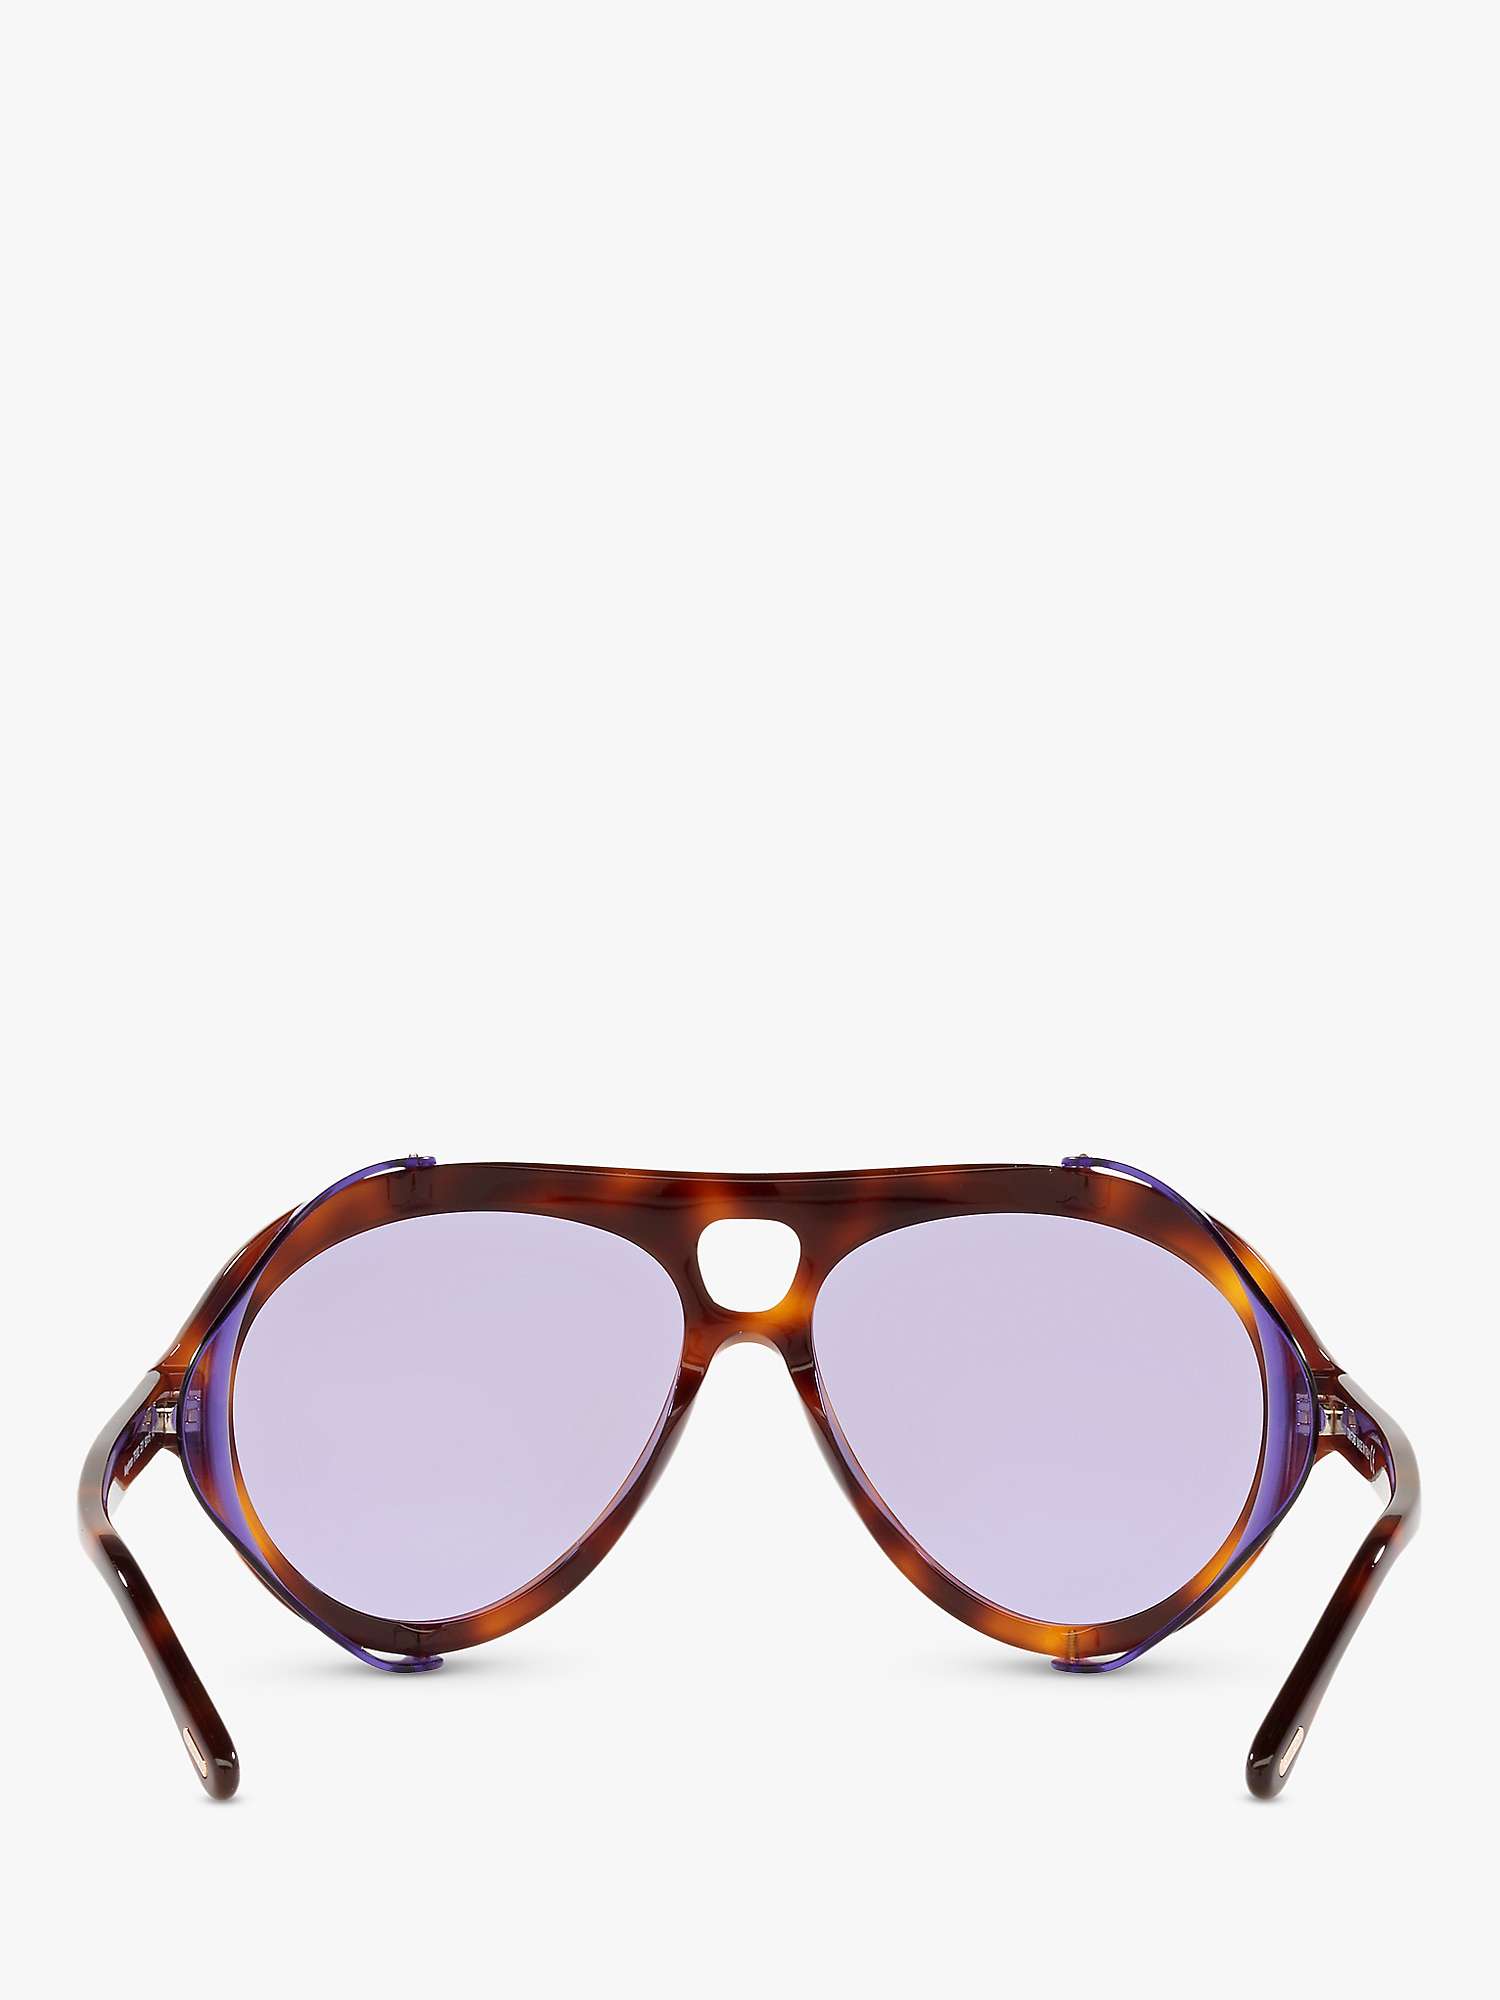 Buy TOM FORD FT0882 Men's Neughman Oval Sunglasses, Tortoise/Lilac Online at johnlewis.com